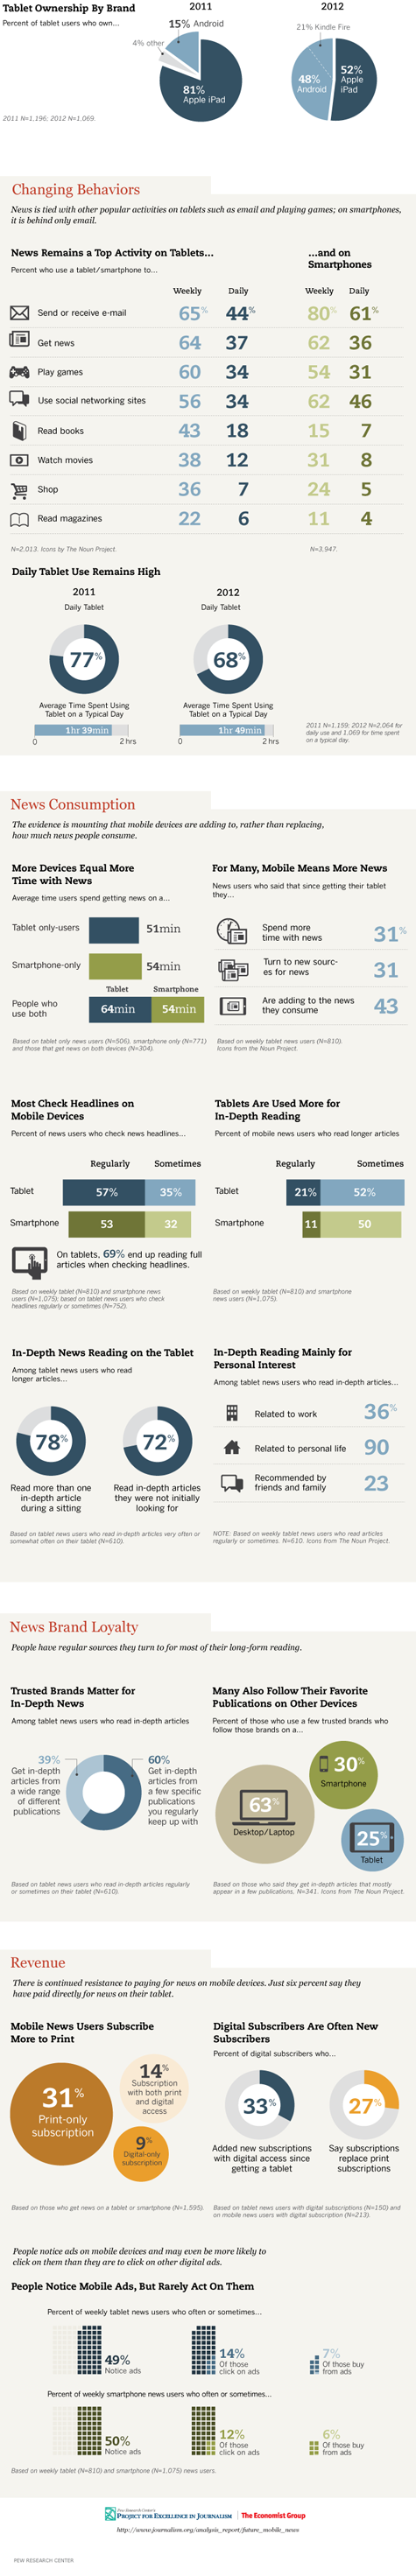 future mobile news infographic2